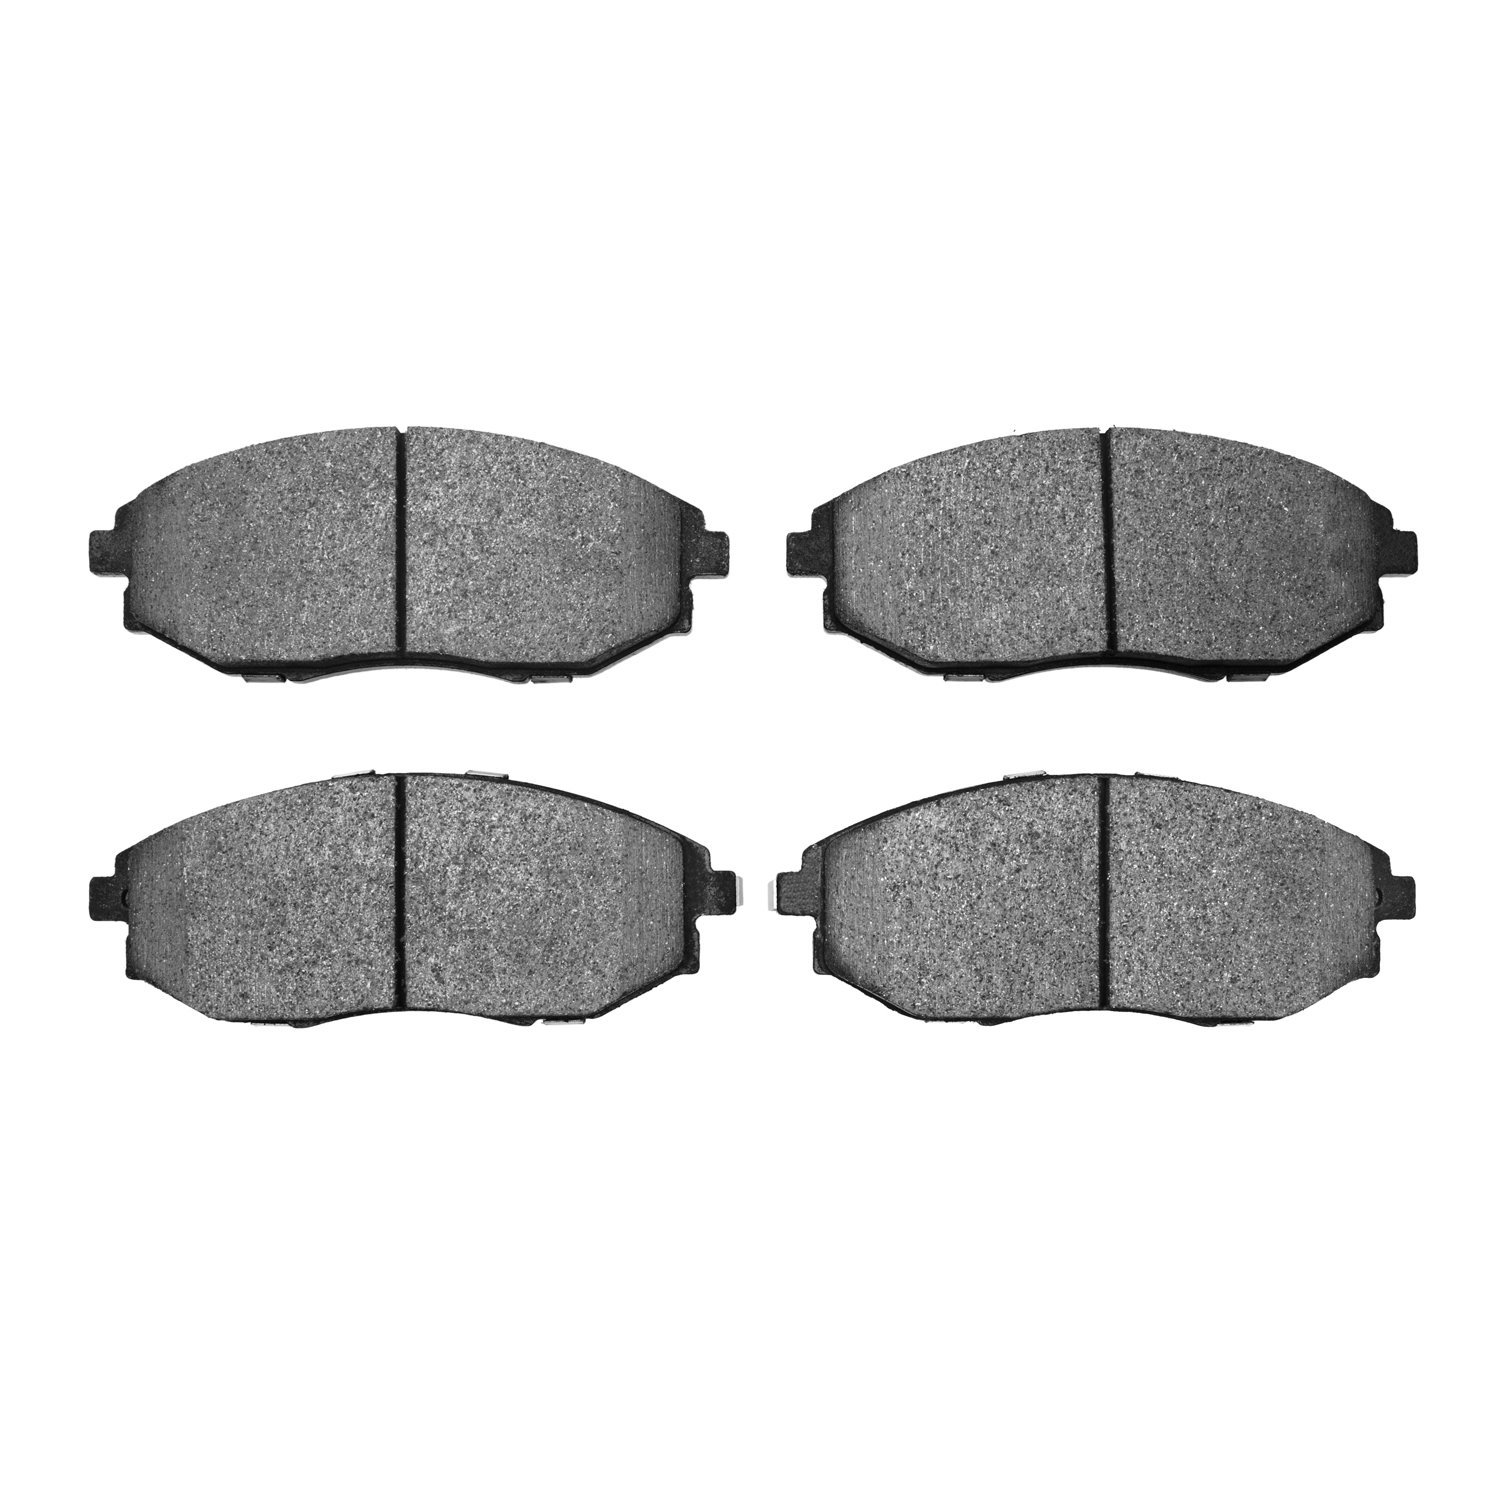 1310-1031-00 3000-Series Ceramic Brake Pads, 2004-2010 Multiple Makes/Models, Position: Front